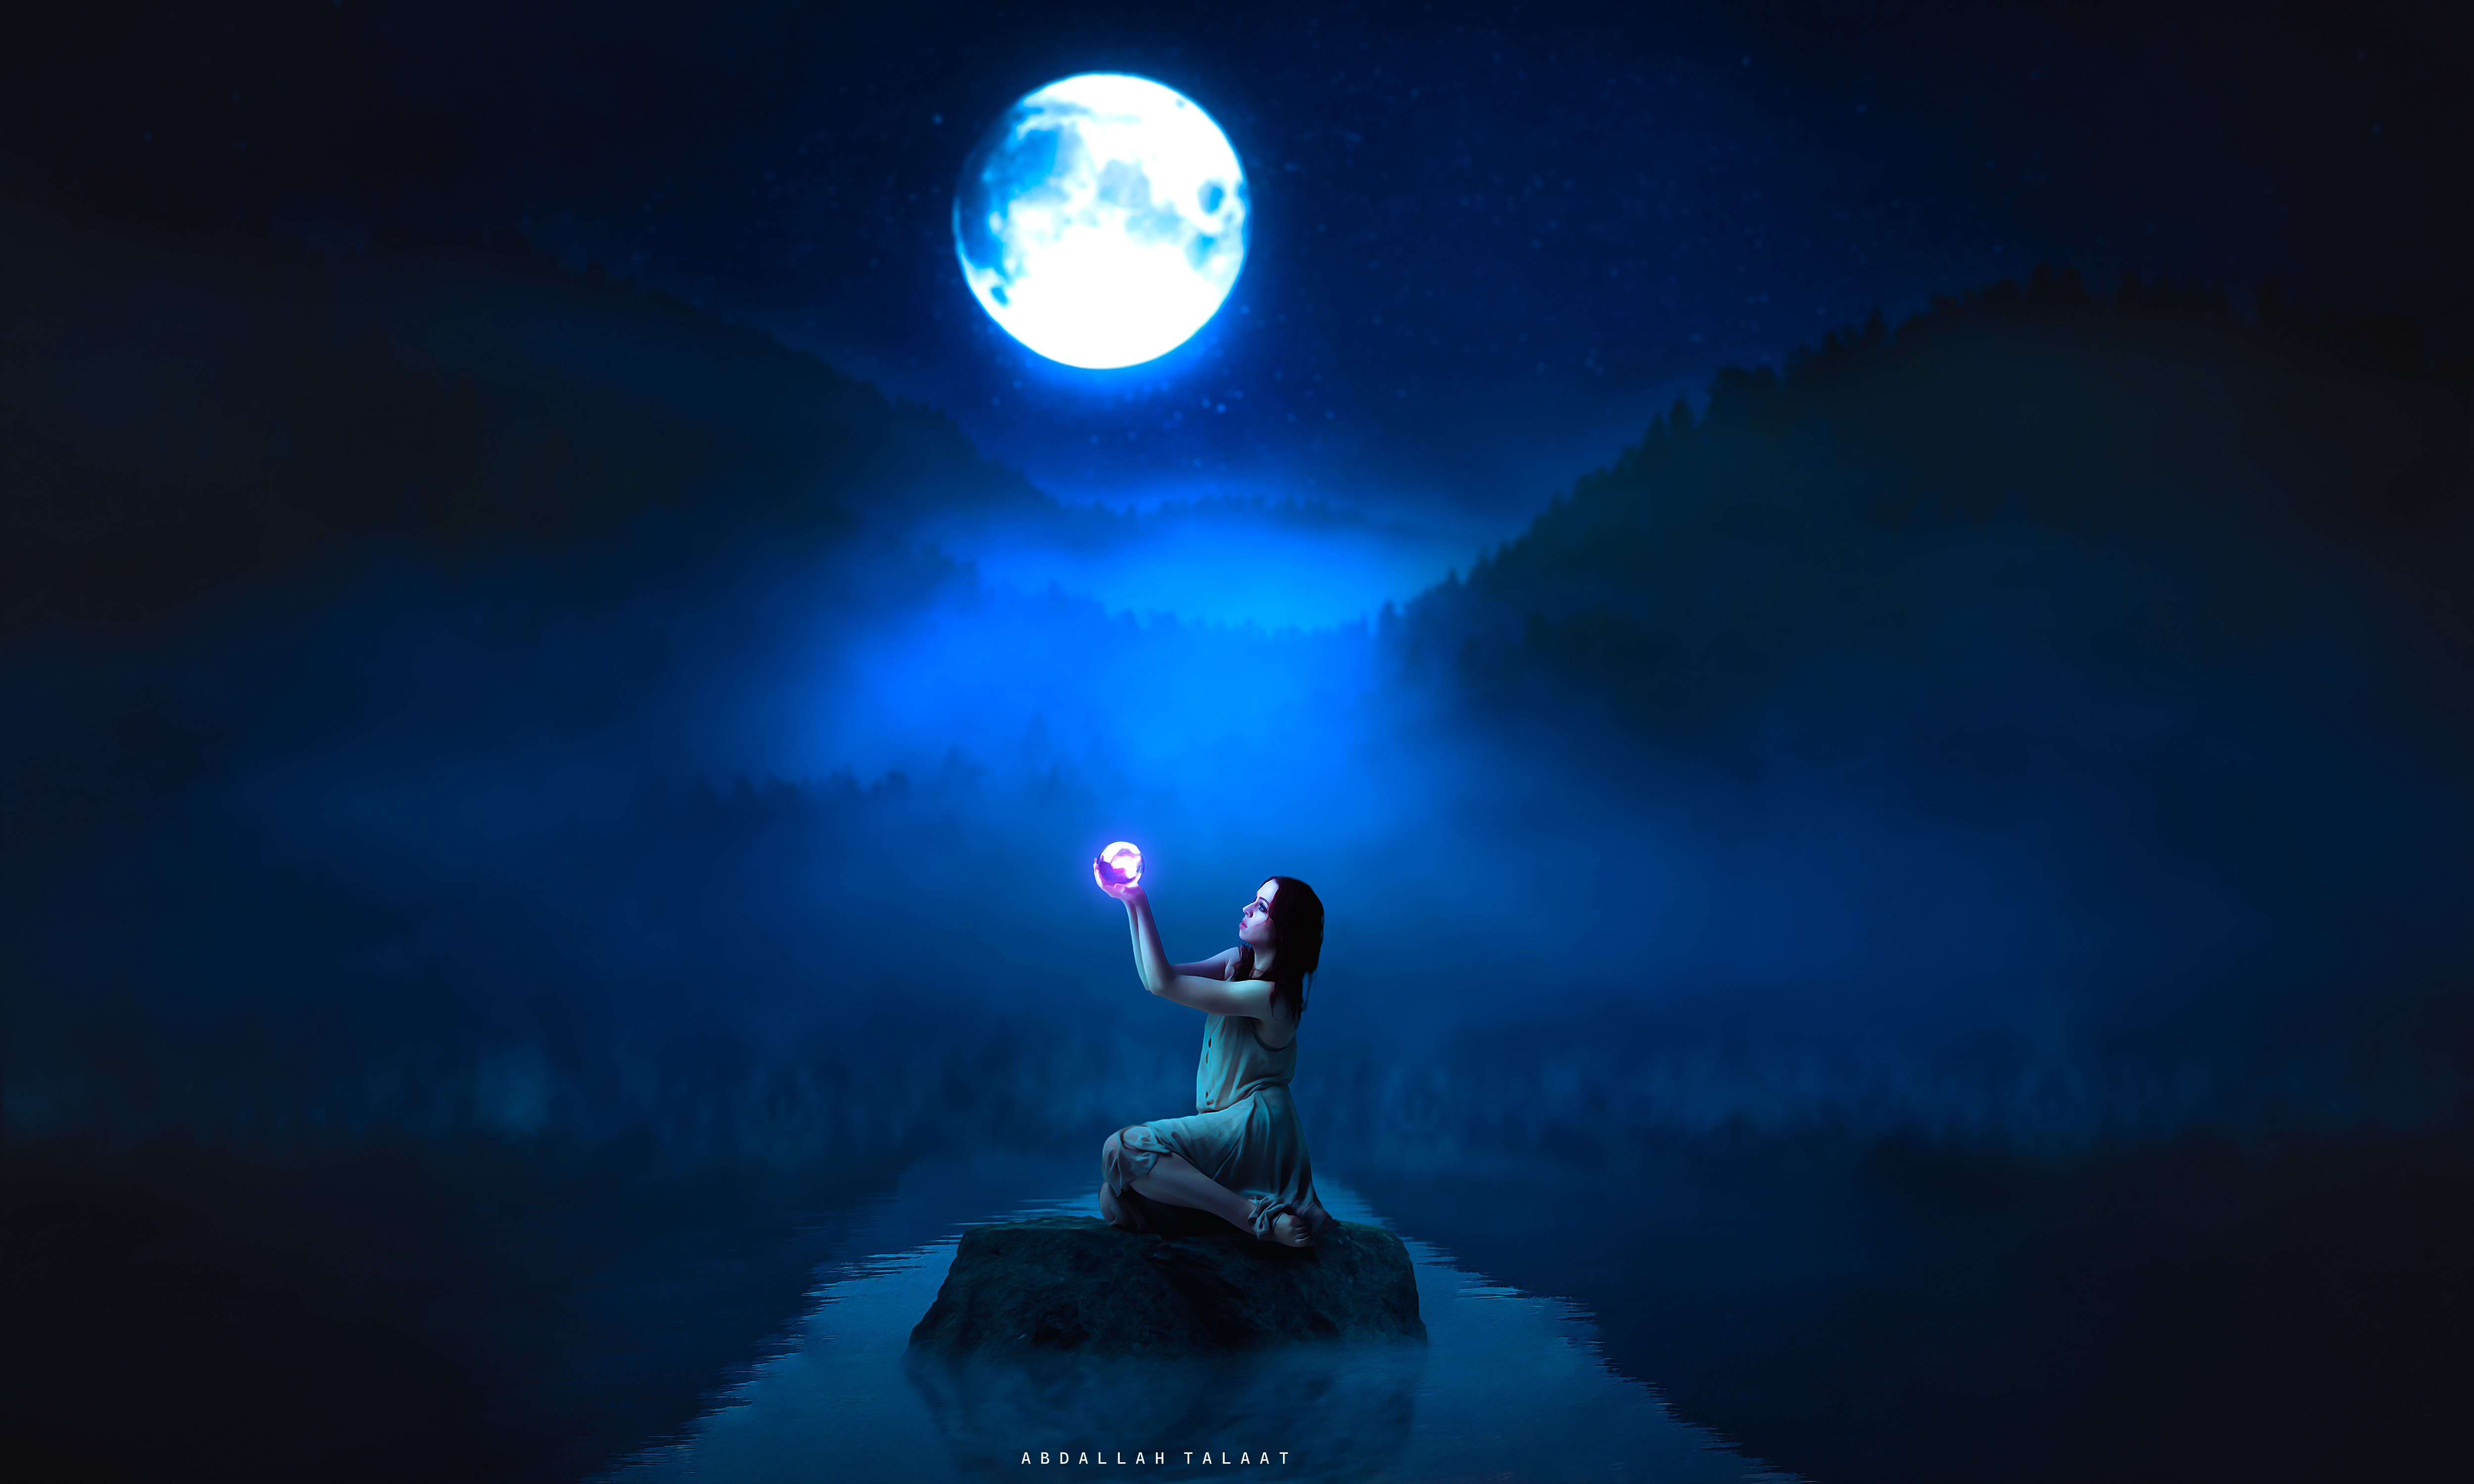 Fantasy Girl Night Moonlight Dark Silent Moon Abdallah Talat Watermarked Digital Art Women 5000x3000